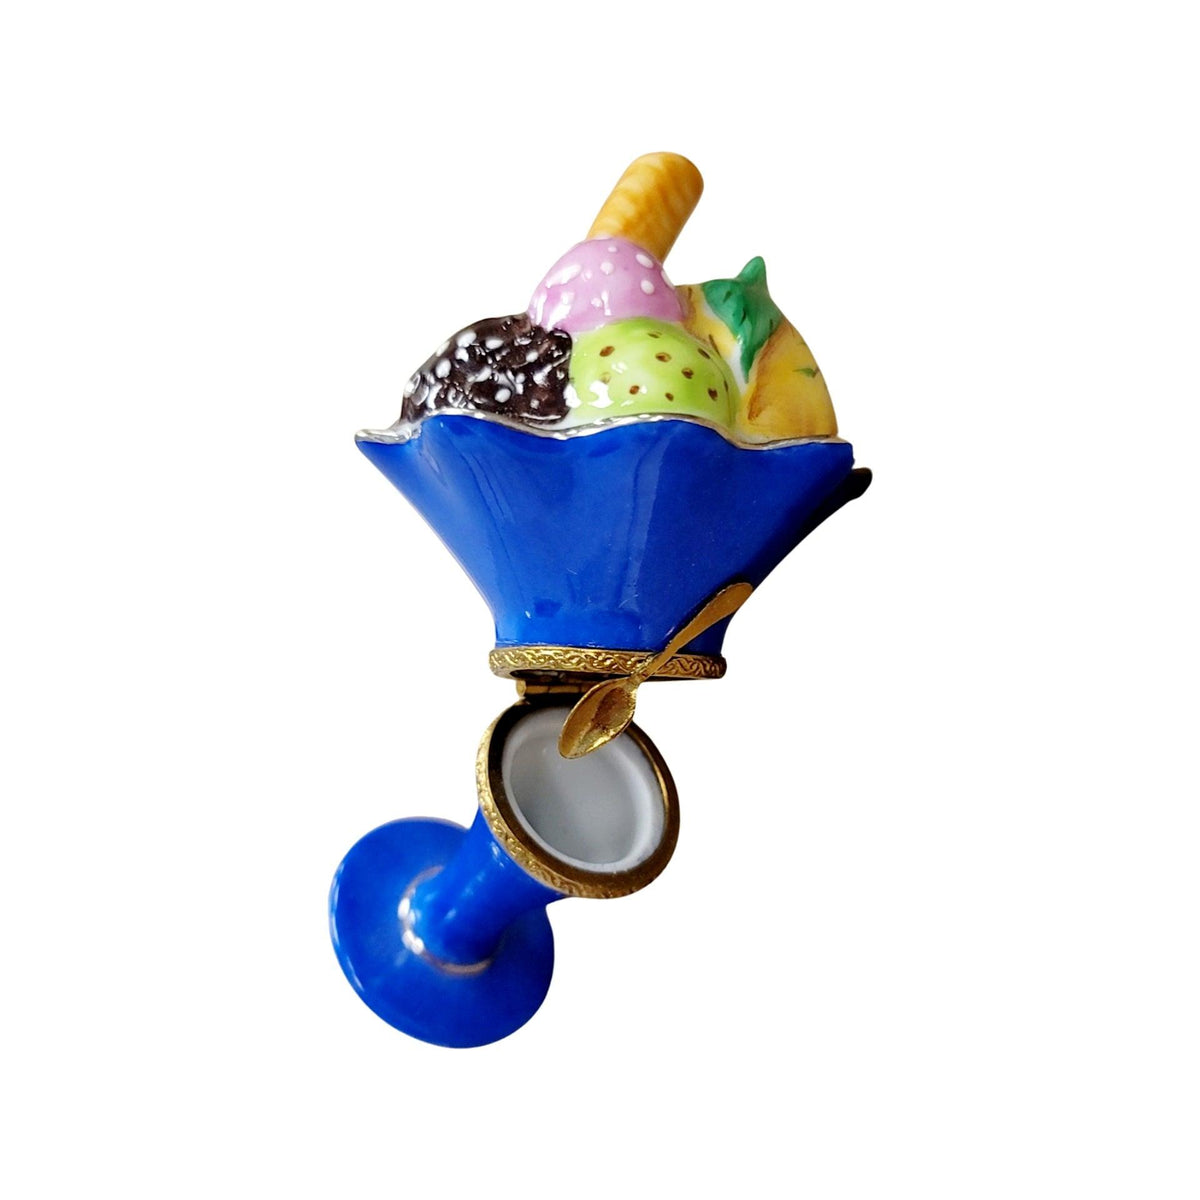 Ice Cream Sunday w Fruit Rare Limoges Box Porcelain Figurine-food-CH3S174